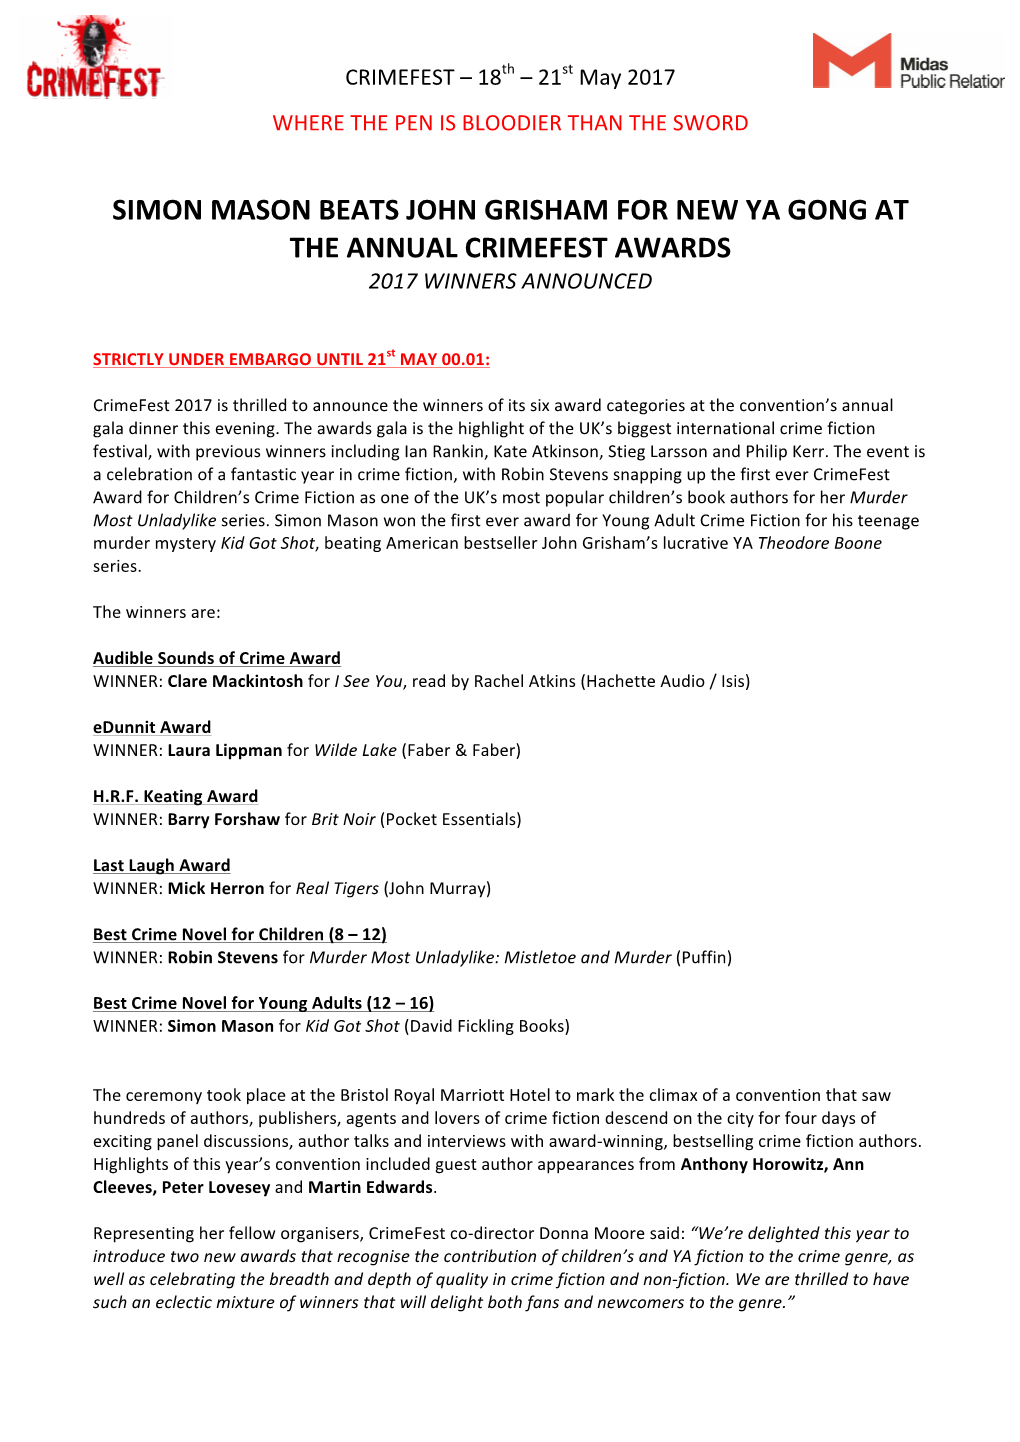 Simon Mason Beats John Grisham for New Ya Gong at the Annual Crimefest Awards 2017 Winners Announced